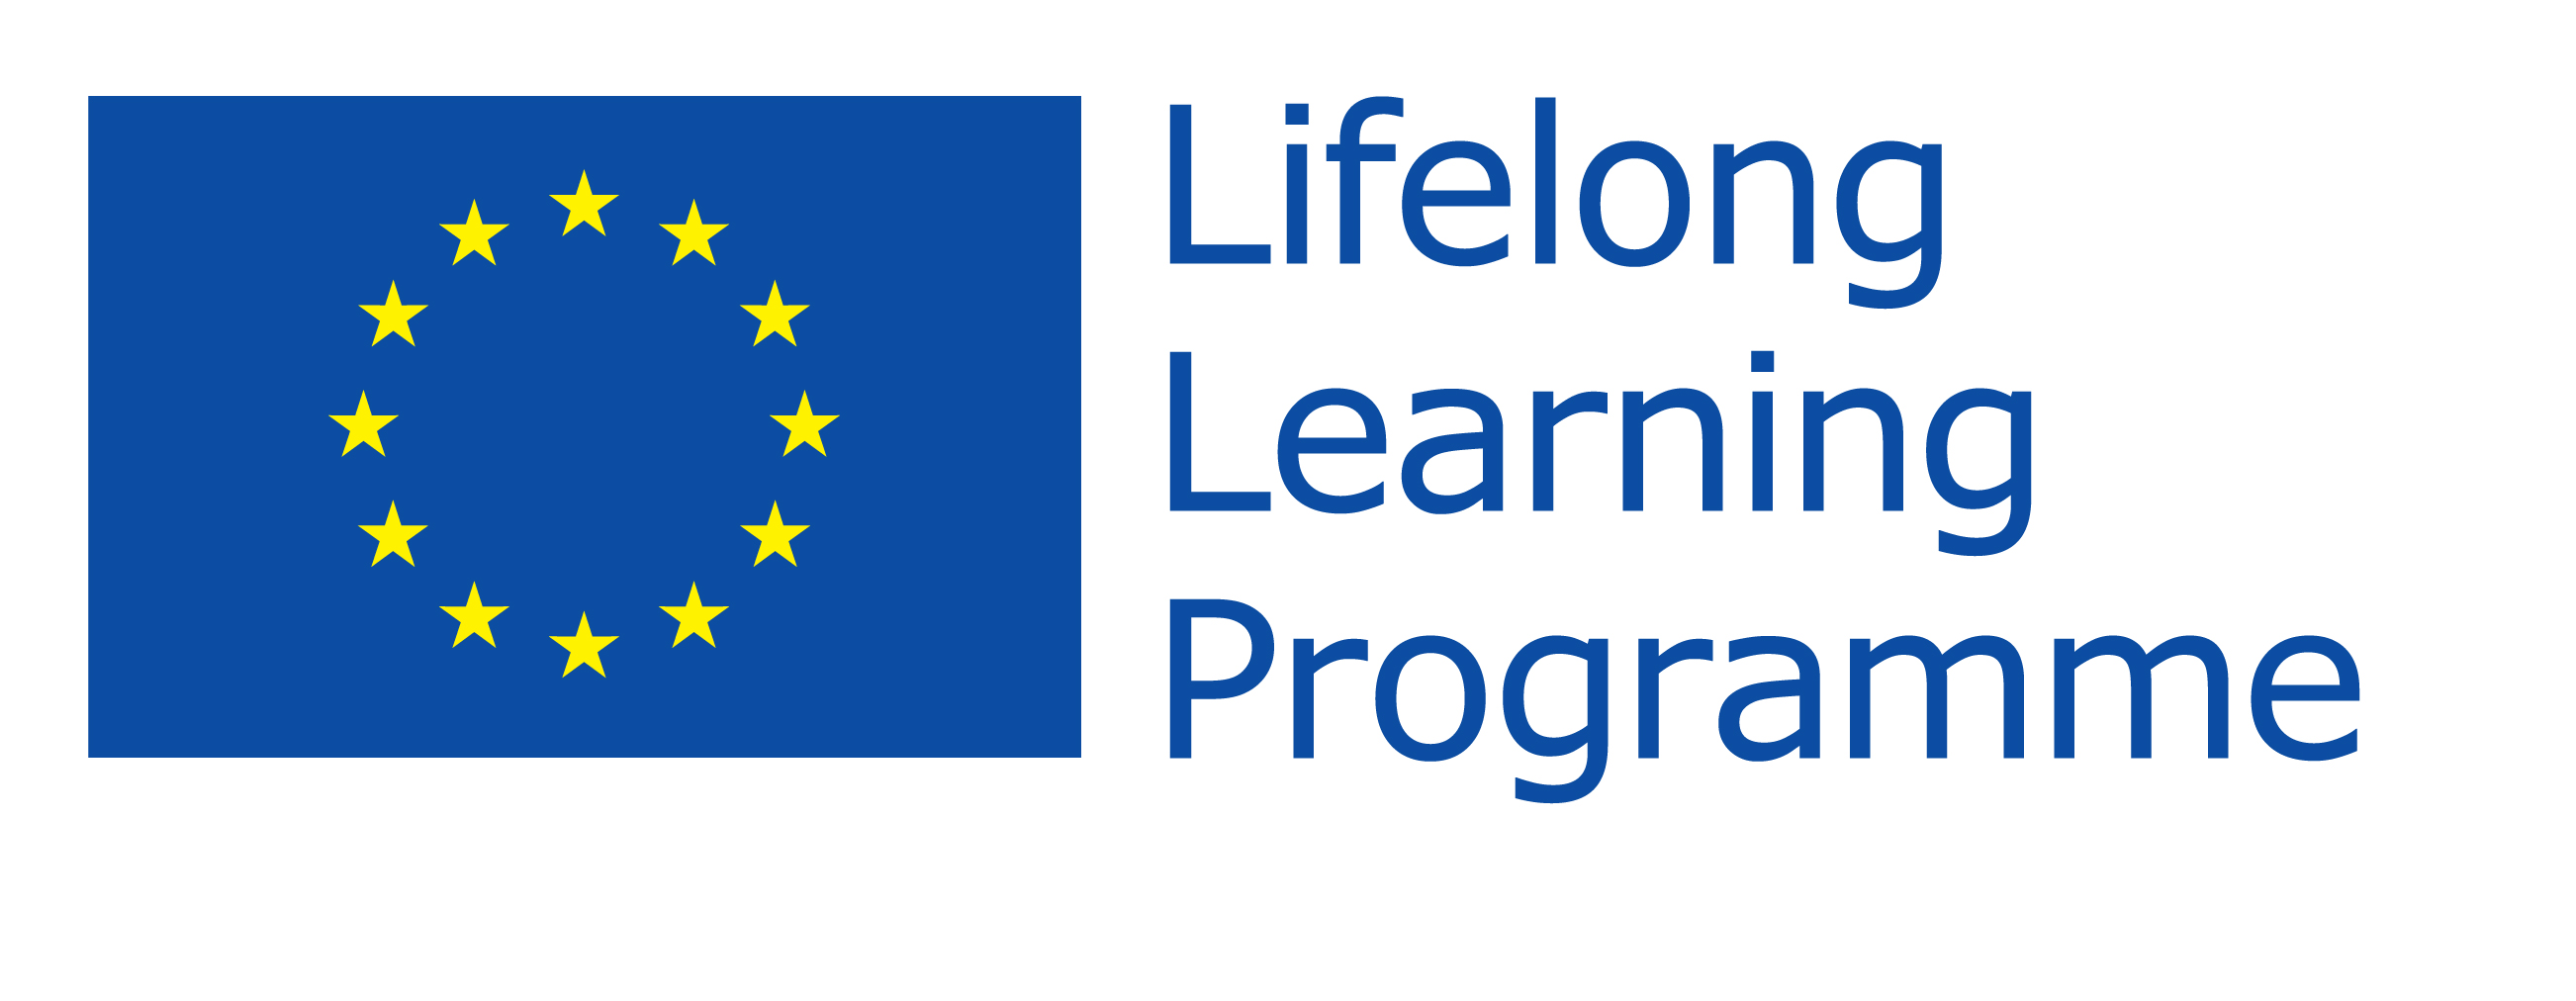 lifelong learning programme